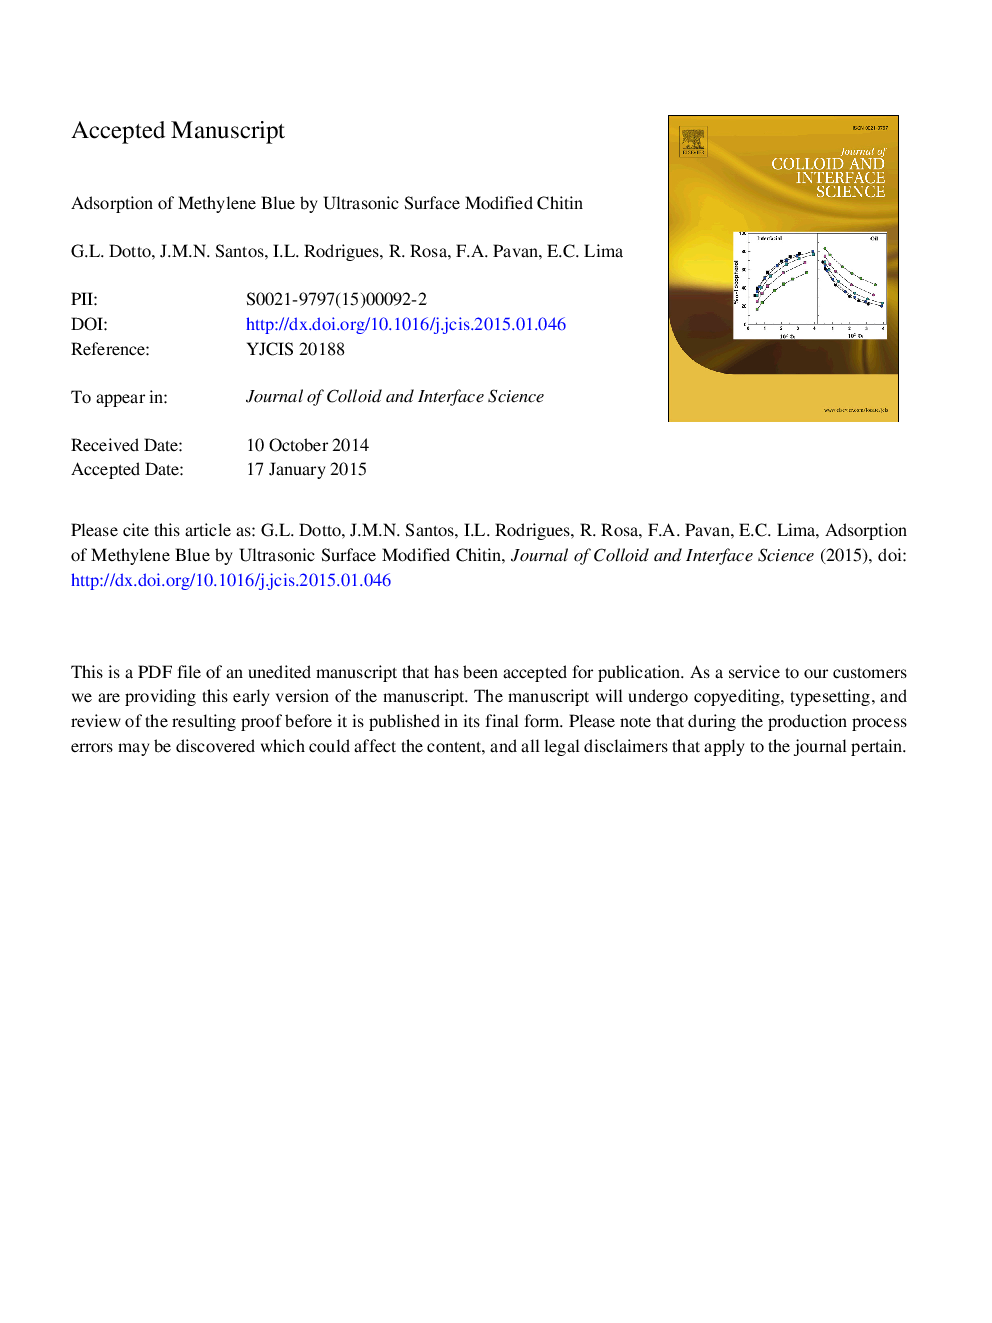 جذب متیلن آبی توسط کیتین اصلاح شده با سطح اولتراسونیک 